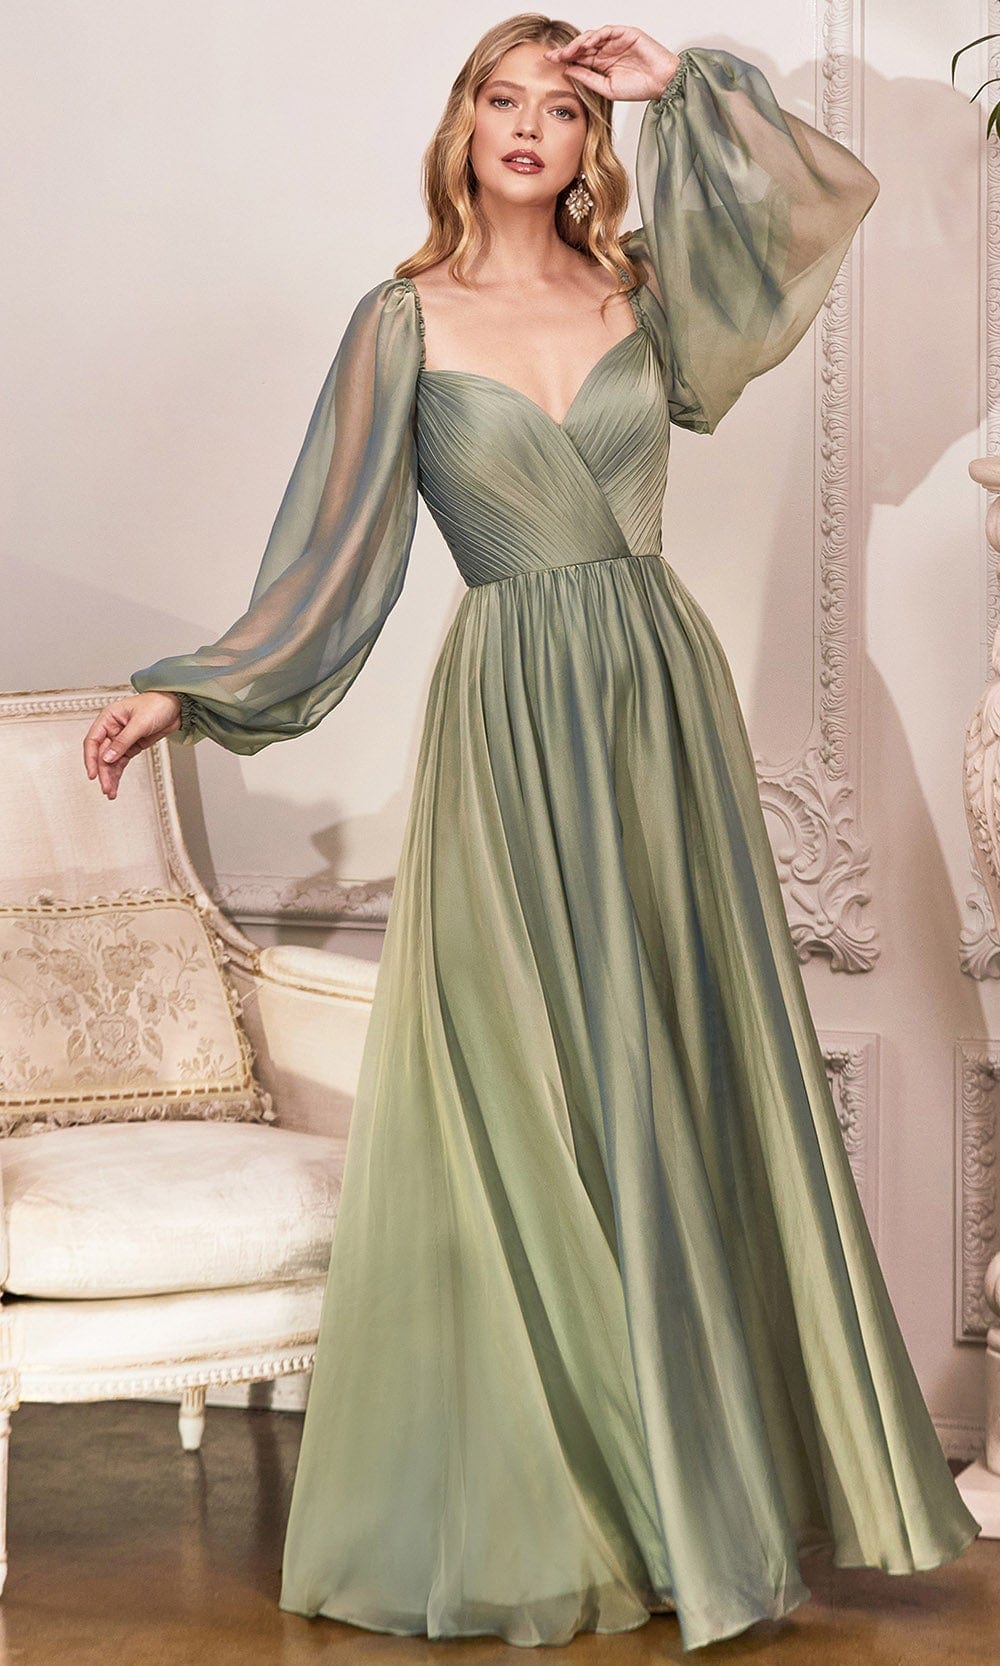 Cinderella Divine CD243 - A-Line Evening Dress Special Occasion Dress 2 / Sage